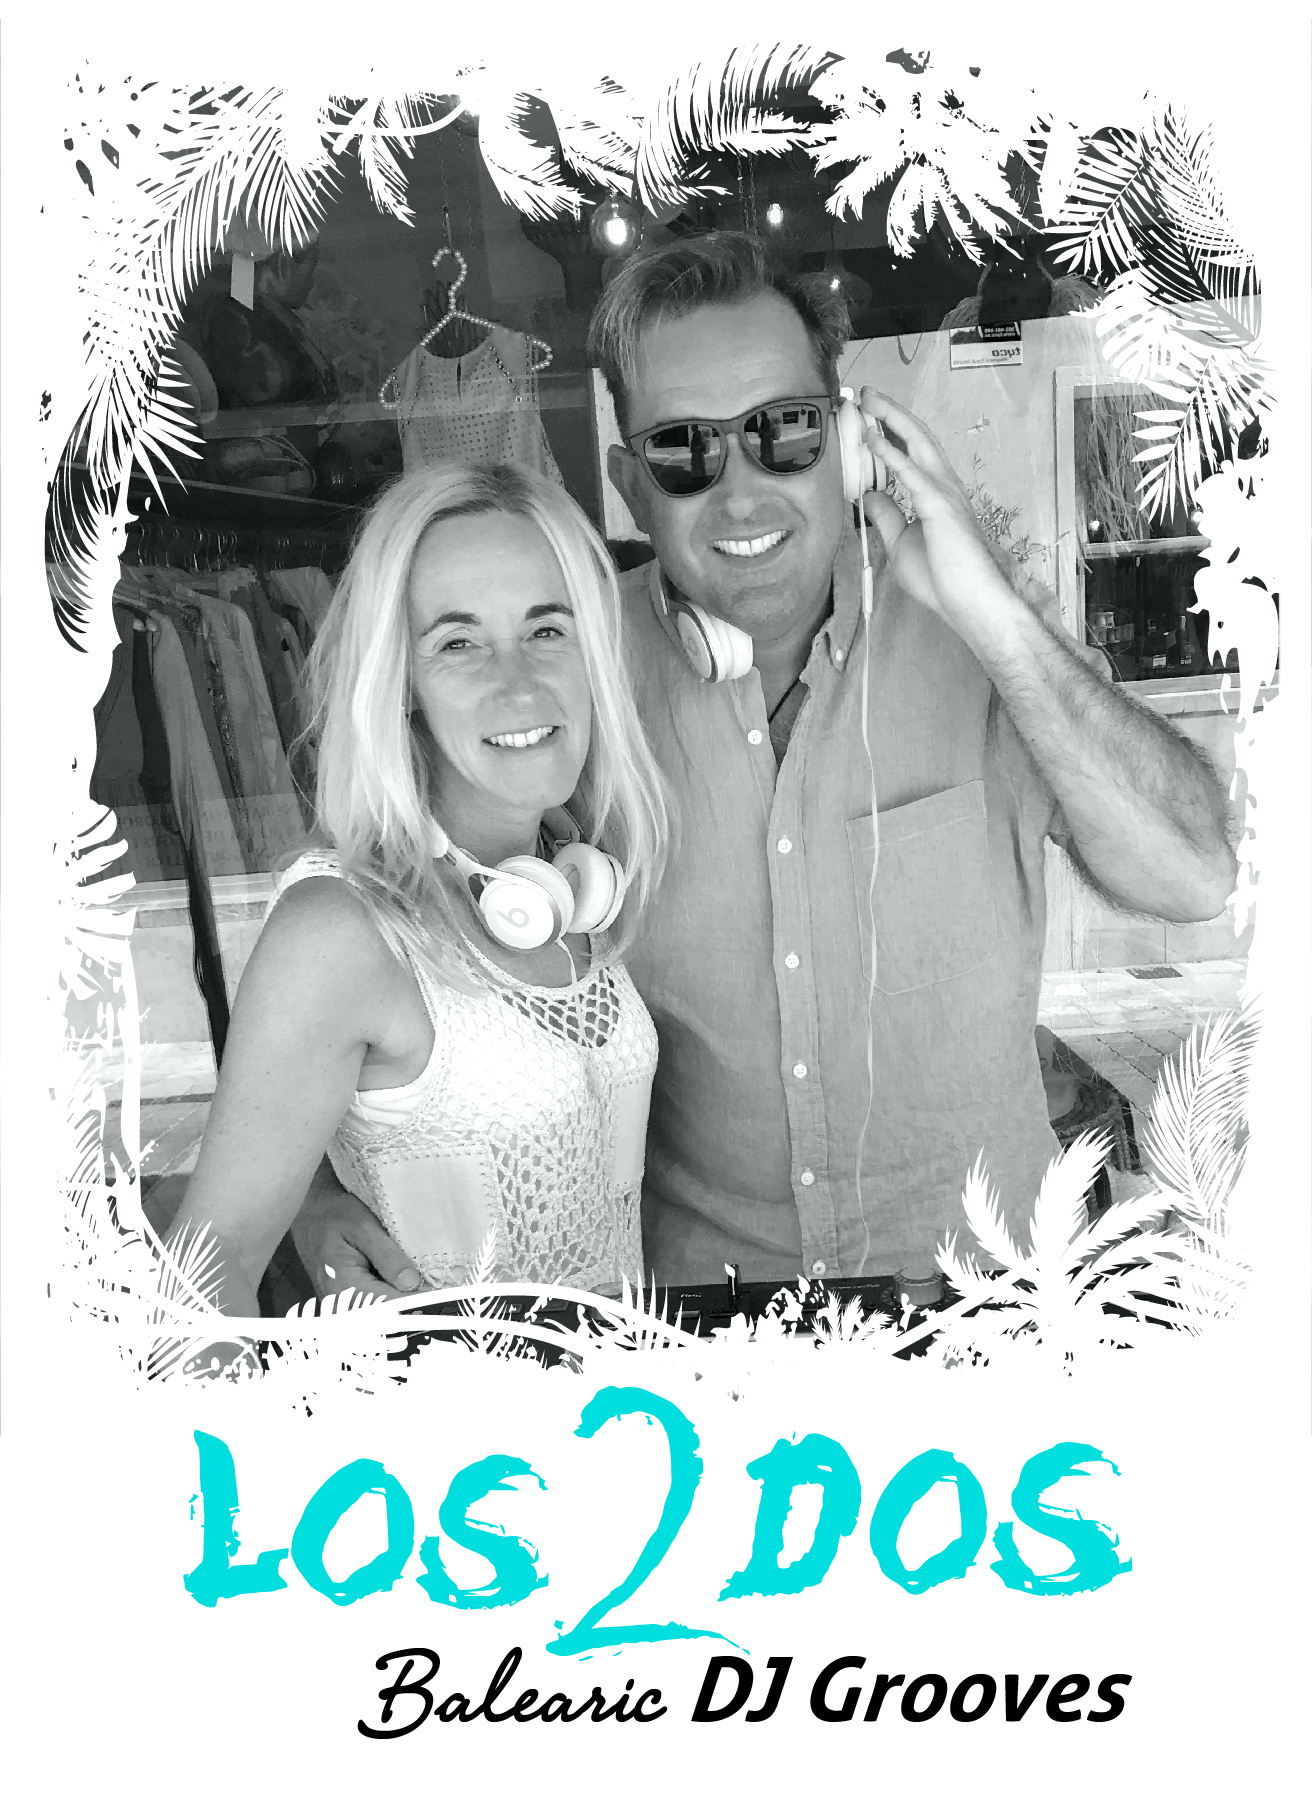 Los2dos Mallorca DJ Duo live